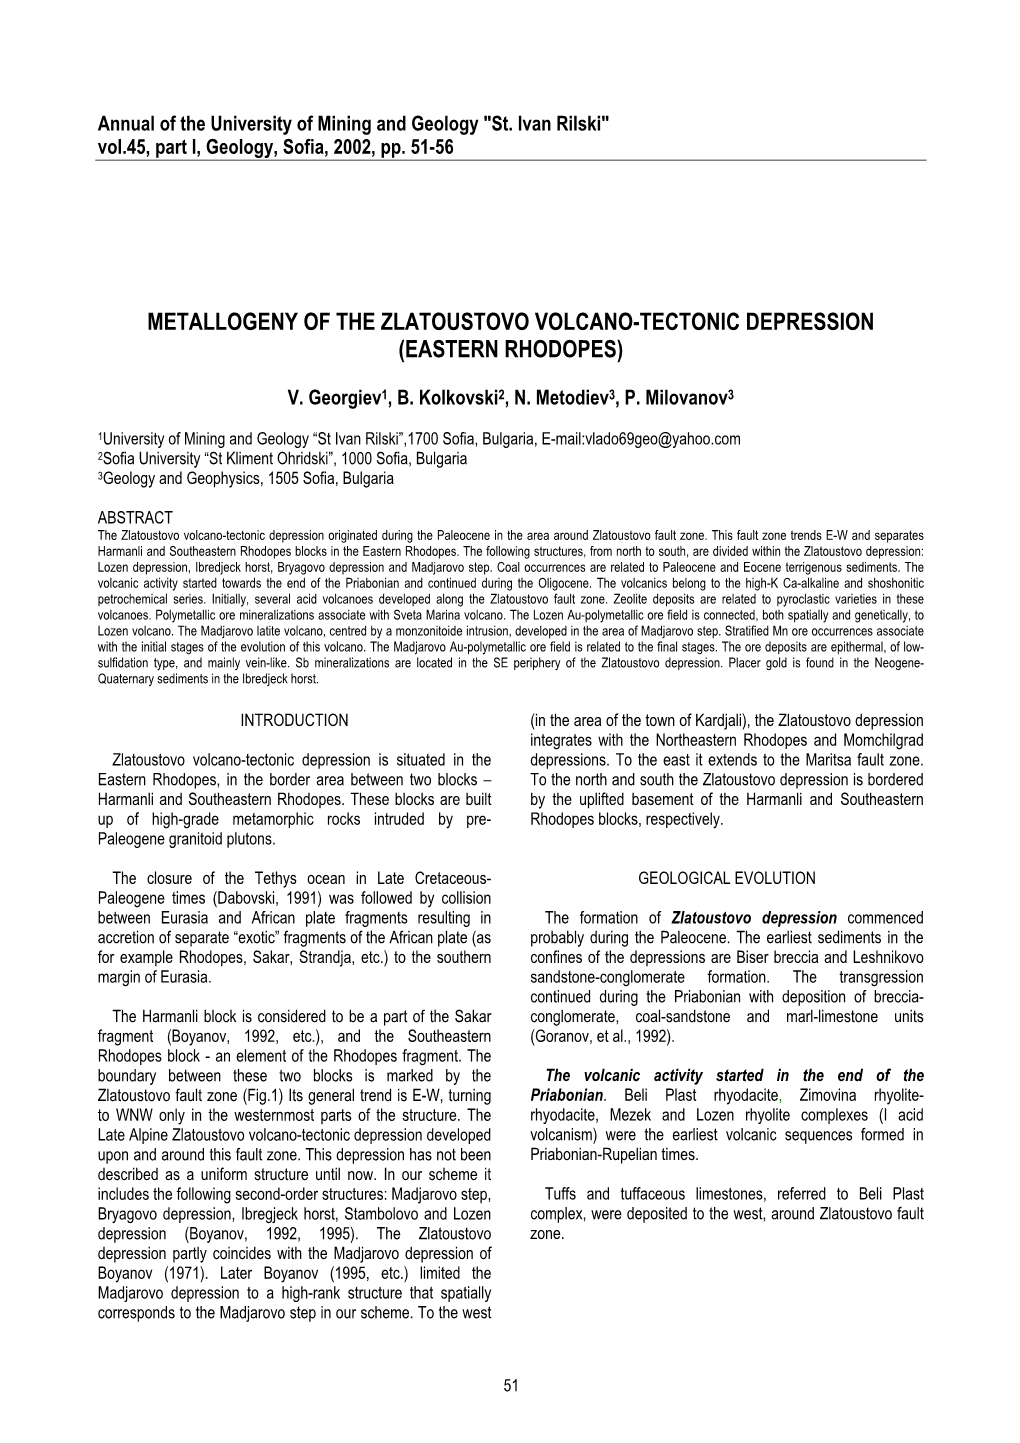 Metallogeny of the Zlatoustovo Volcano-Tectonic Depression (Eastern Rhodopes)